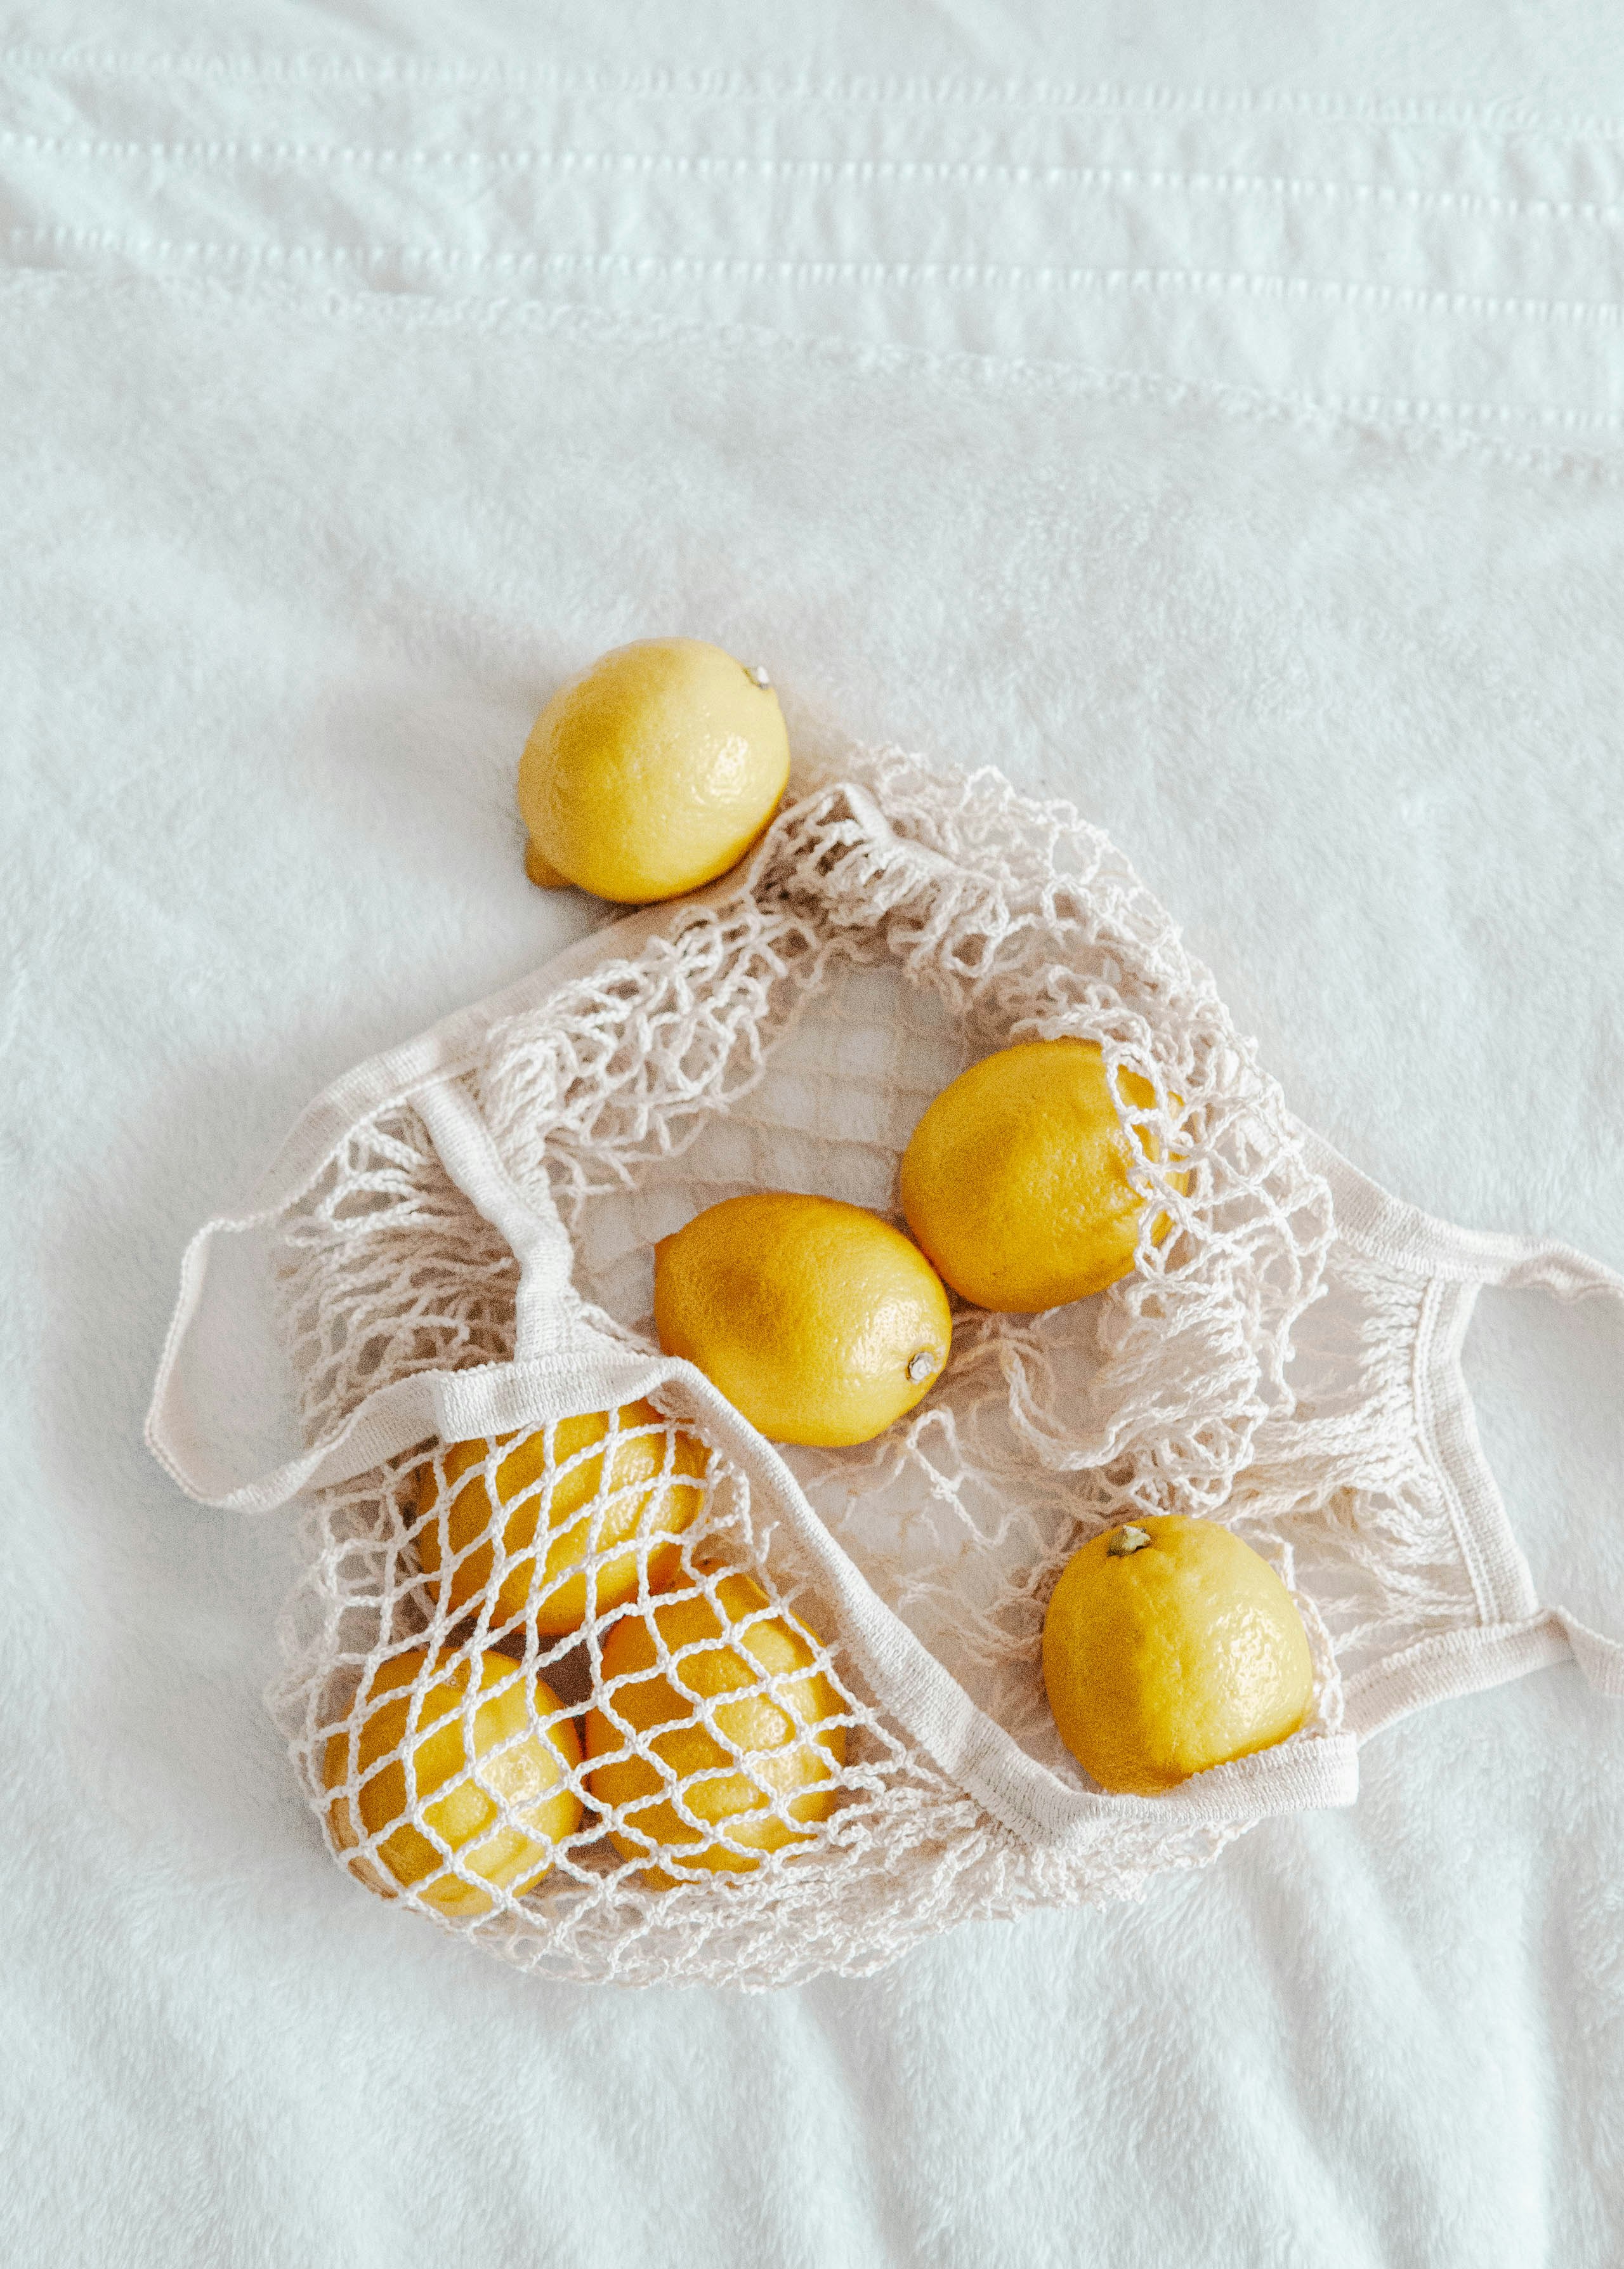 yellow citrus fruit on white lace textile